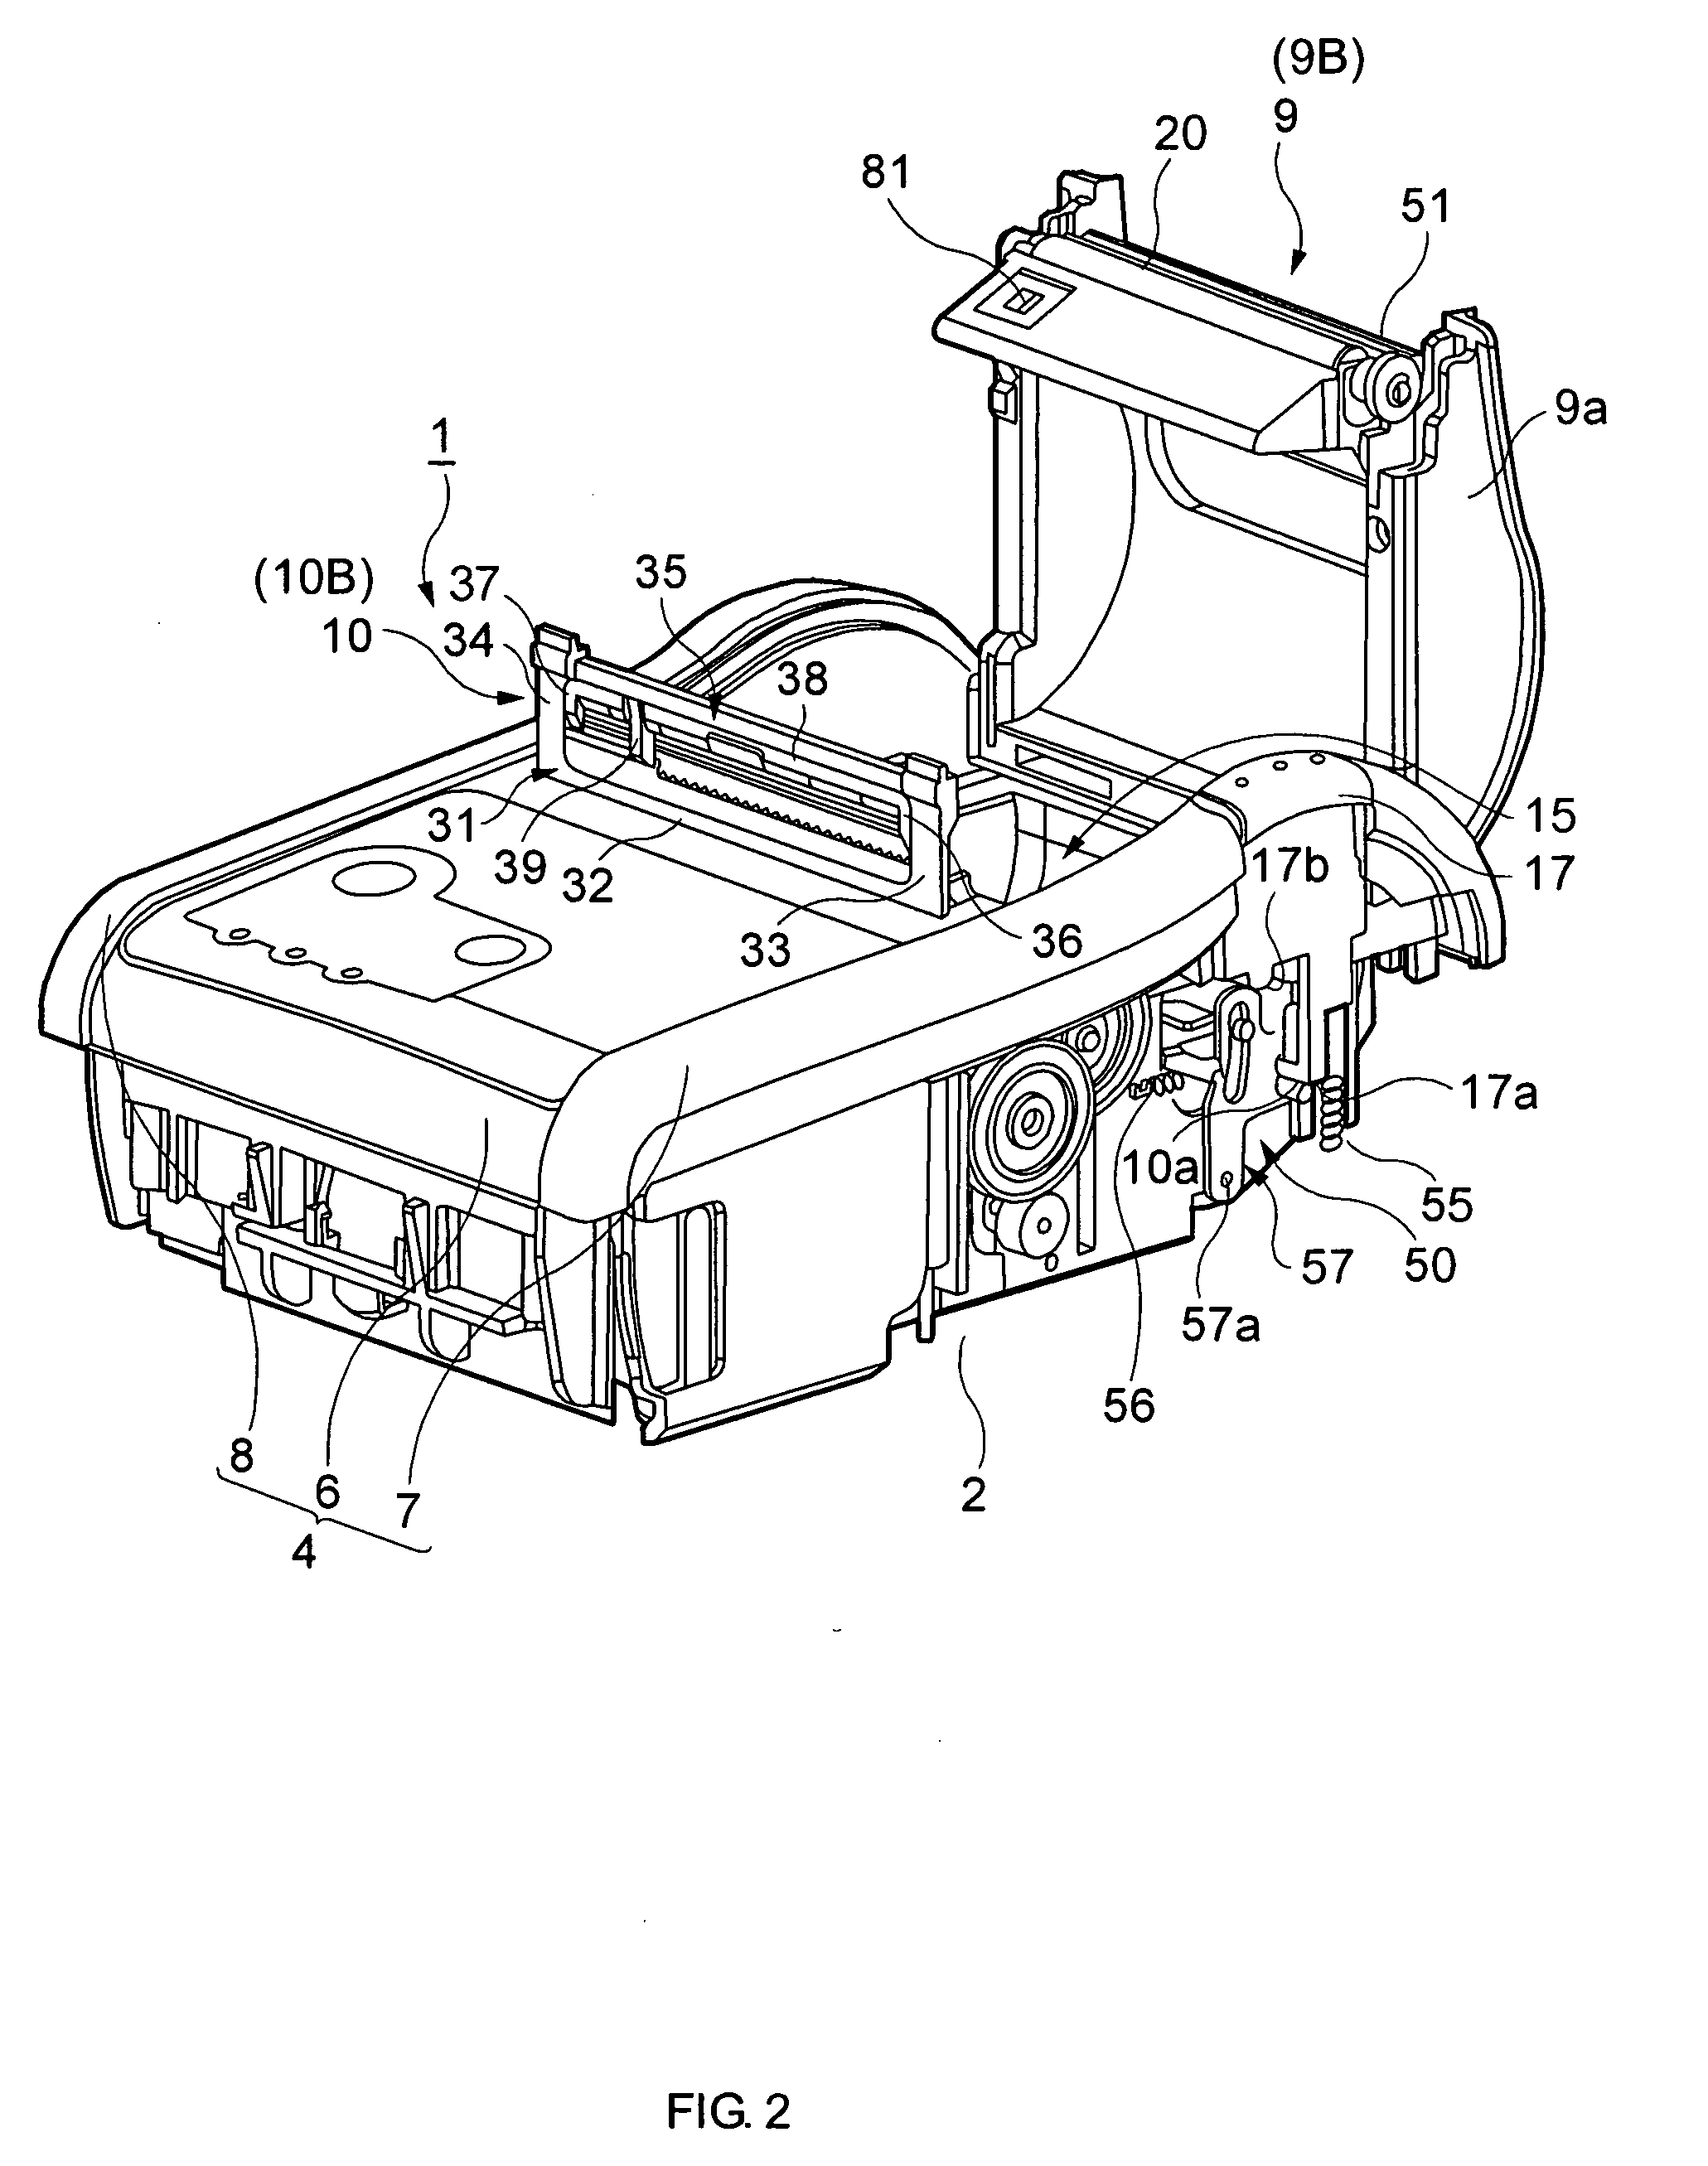 Printer with a peeler mechanism